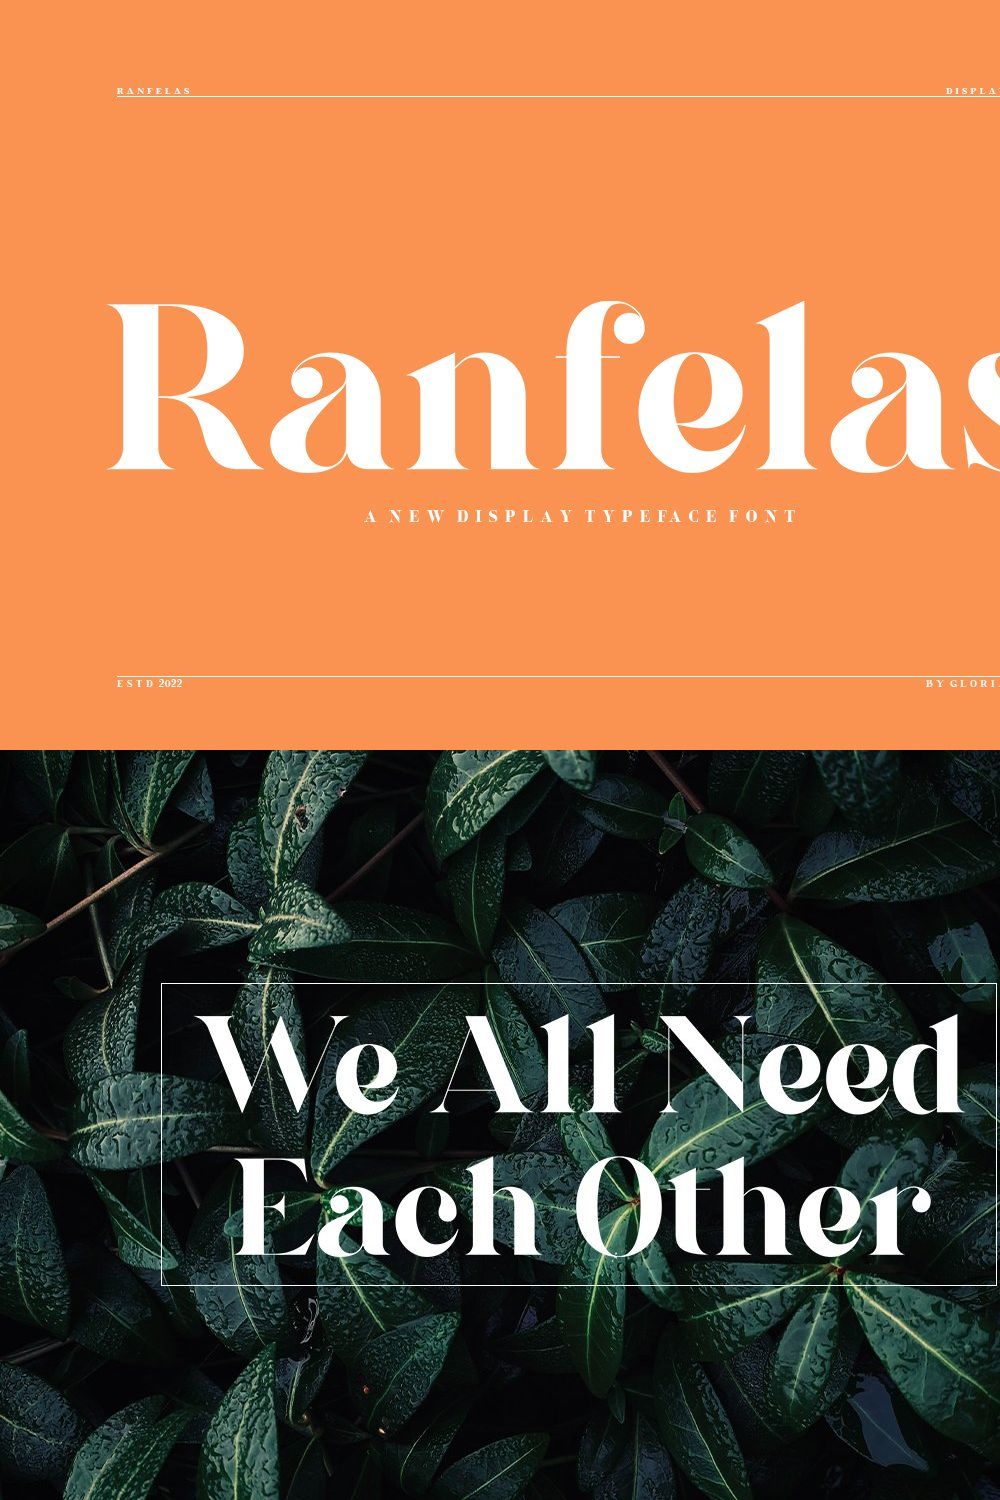 Ranfelas | Elegant Serif Font pinterest preview image.